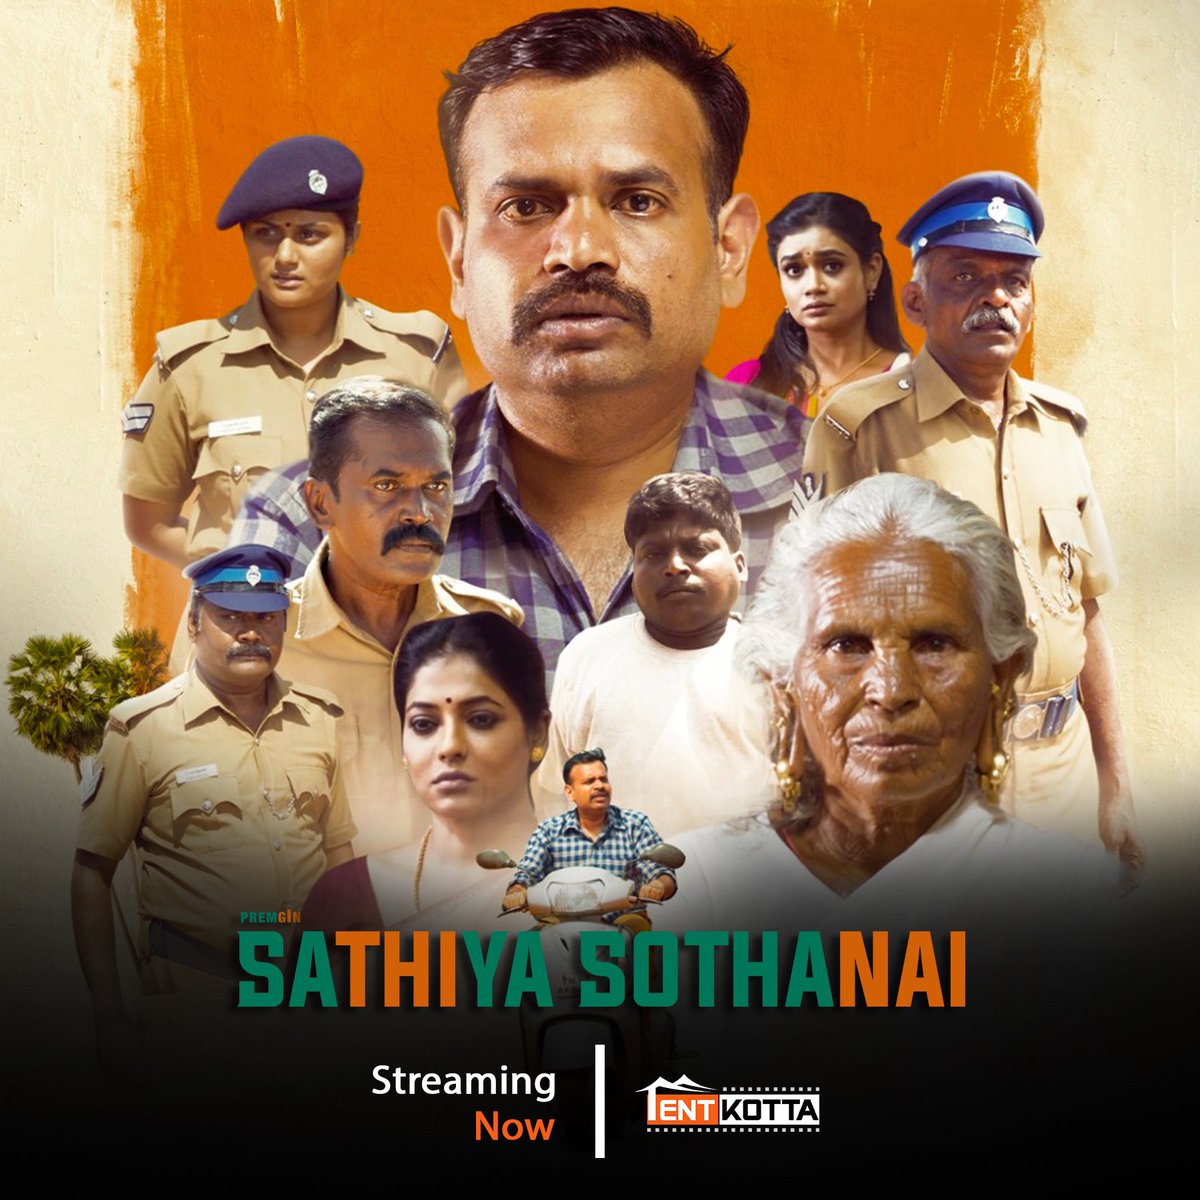 Streaming now #SathiyaSothanai